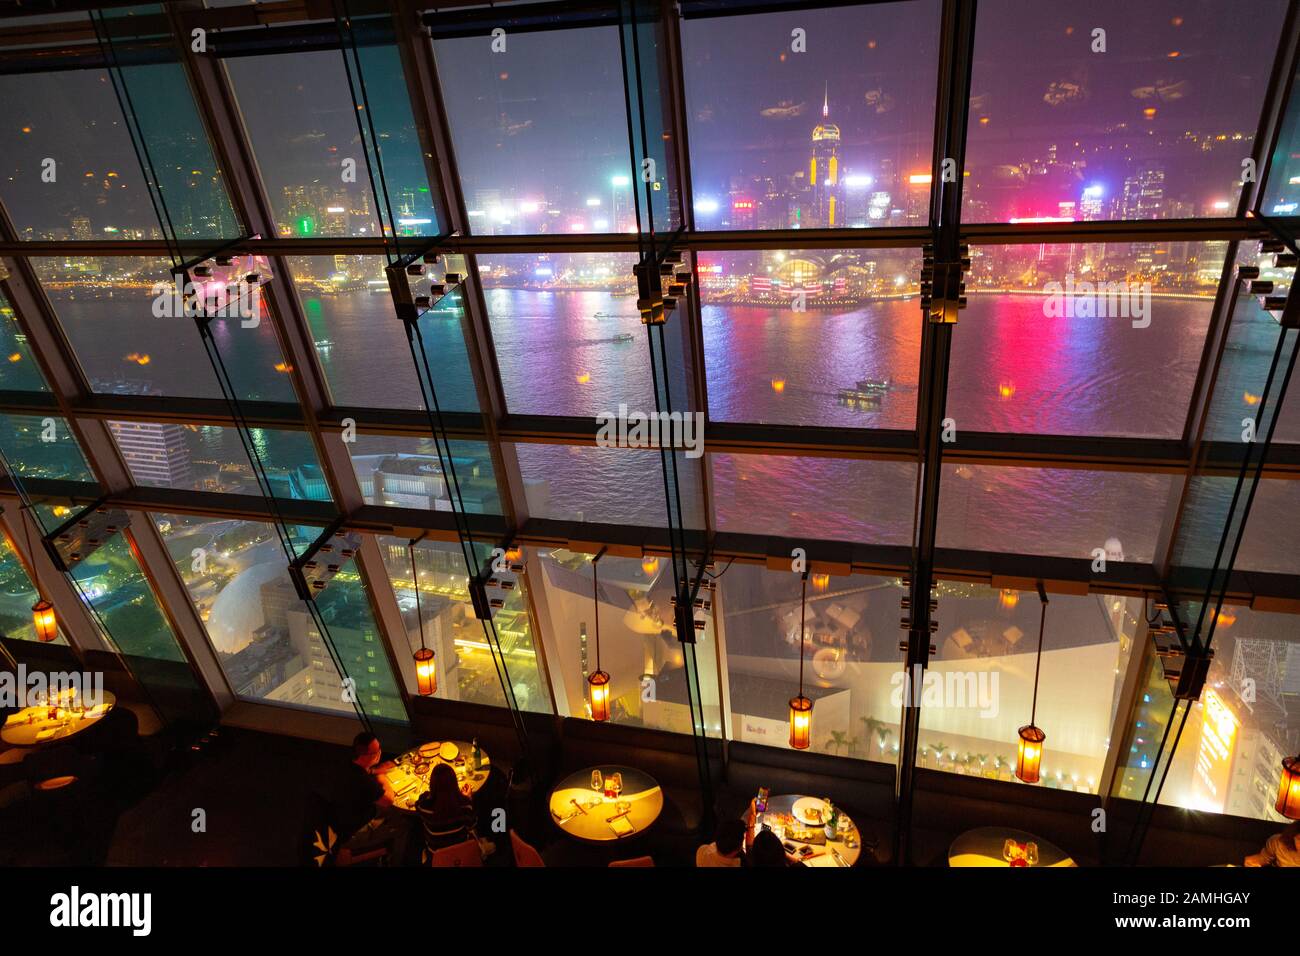 Hongkong Restaurant - Das Aqua Spirit Restaurant und Bar mit Blick auf die Hafenlichtshow in Hongkong am Abend, Tsim Sha Tsui, Kowloon Hong Kong Asia Stockfoto